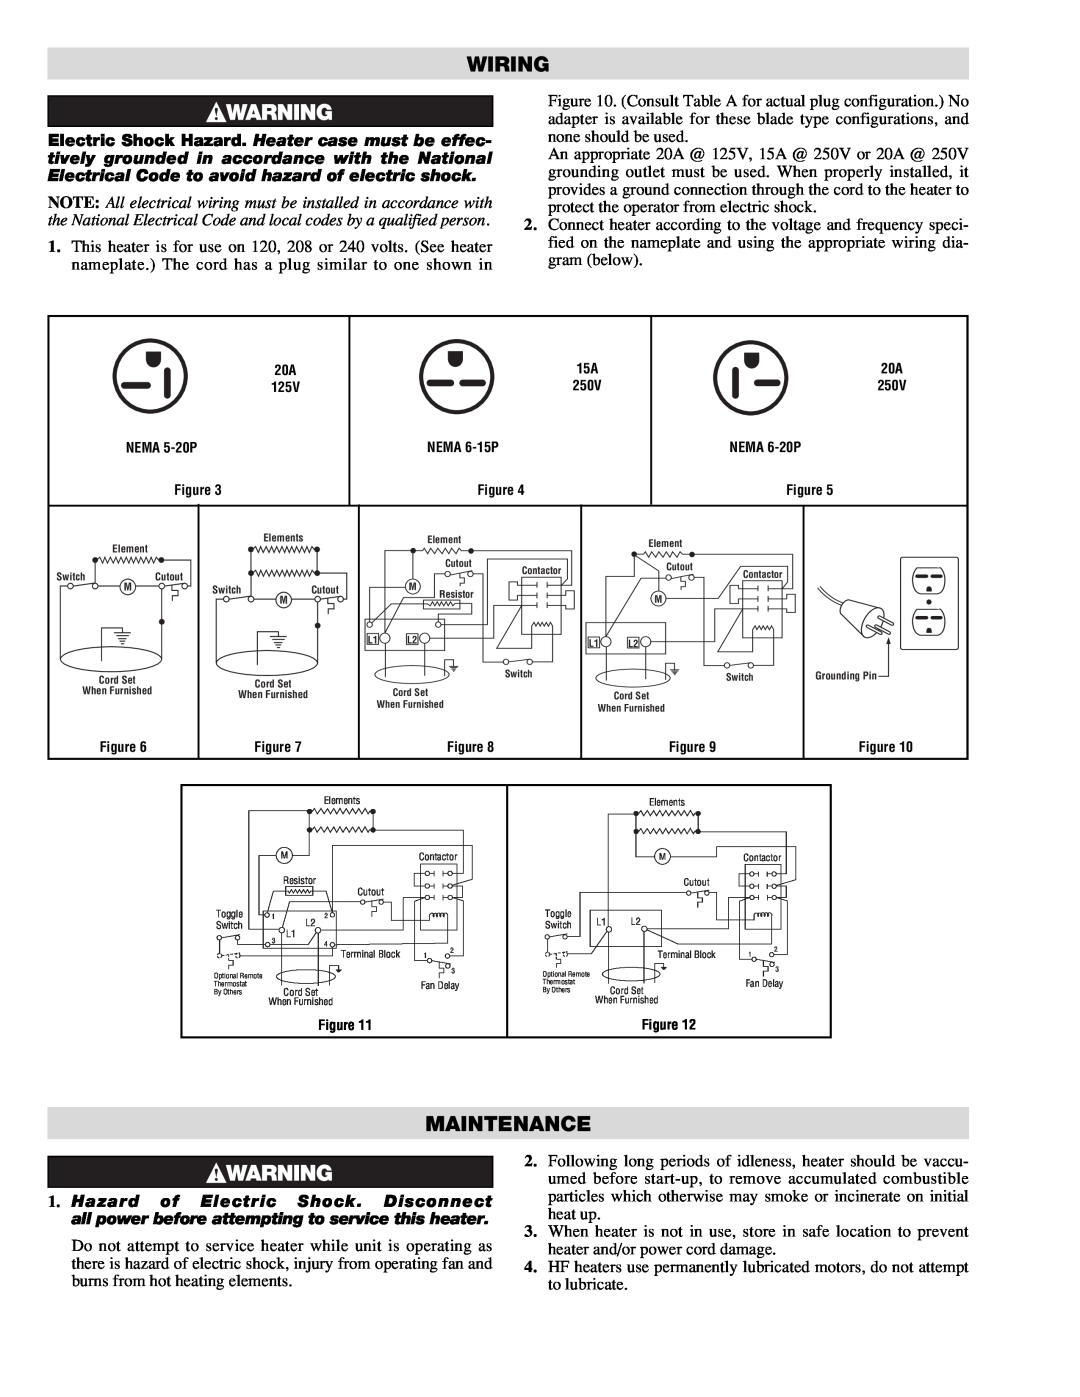 Chromalox PF411-10 installation instructions Wiring, Maintenance, 125V, NEMA 5-20P, NEMA 6-20P 